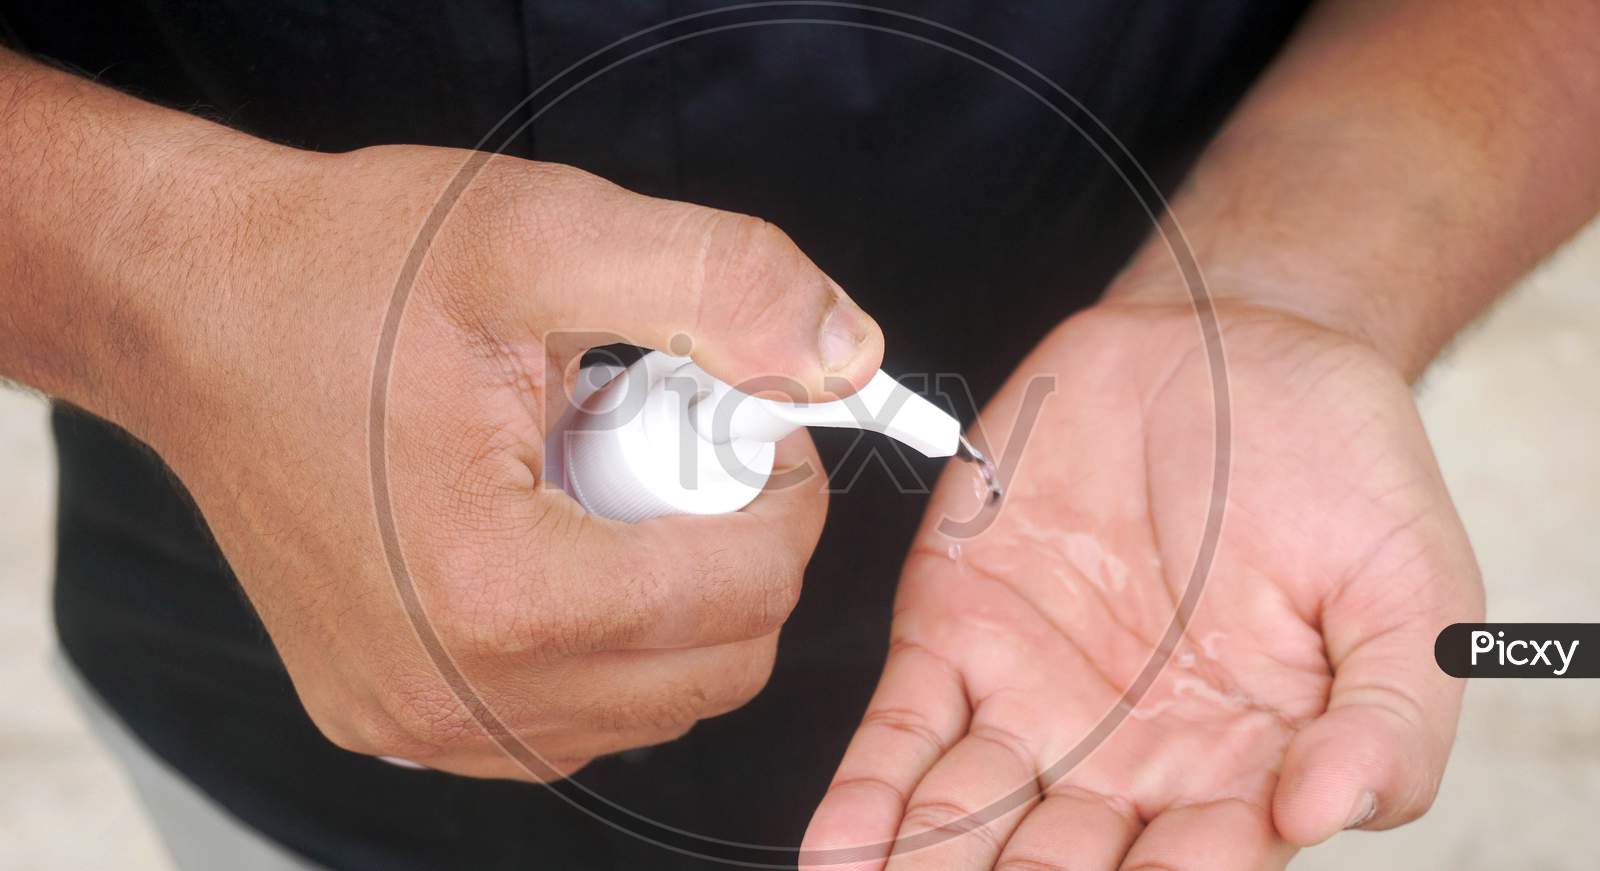 man applying sanitizer to hands